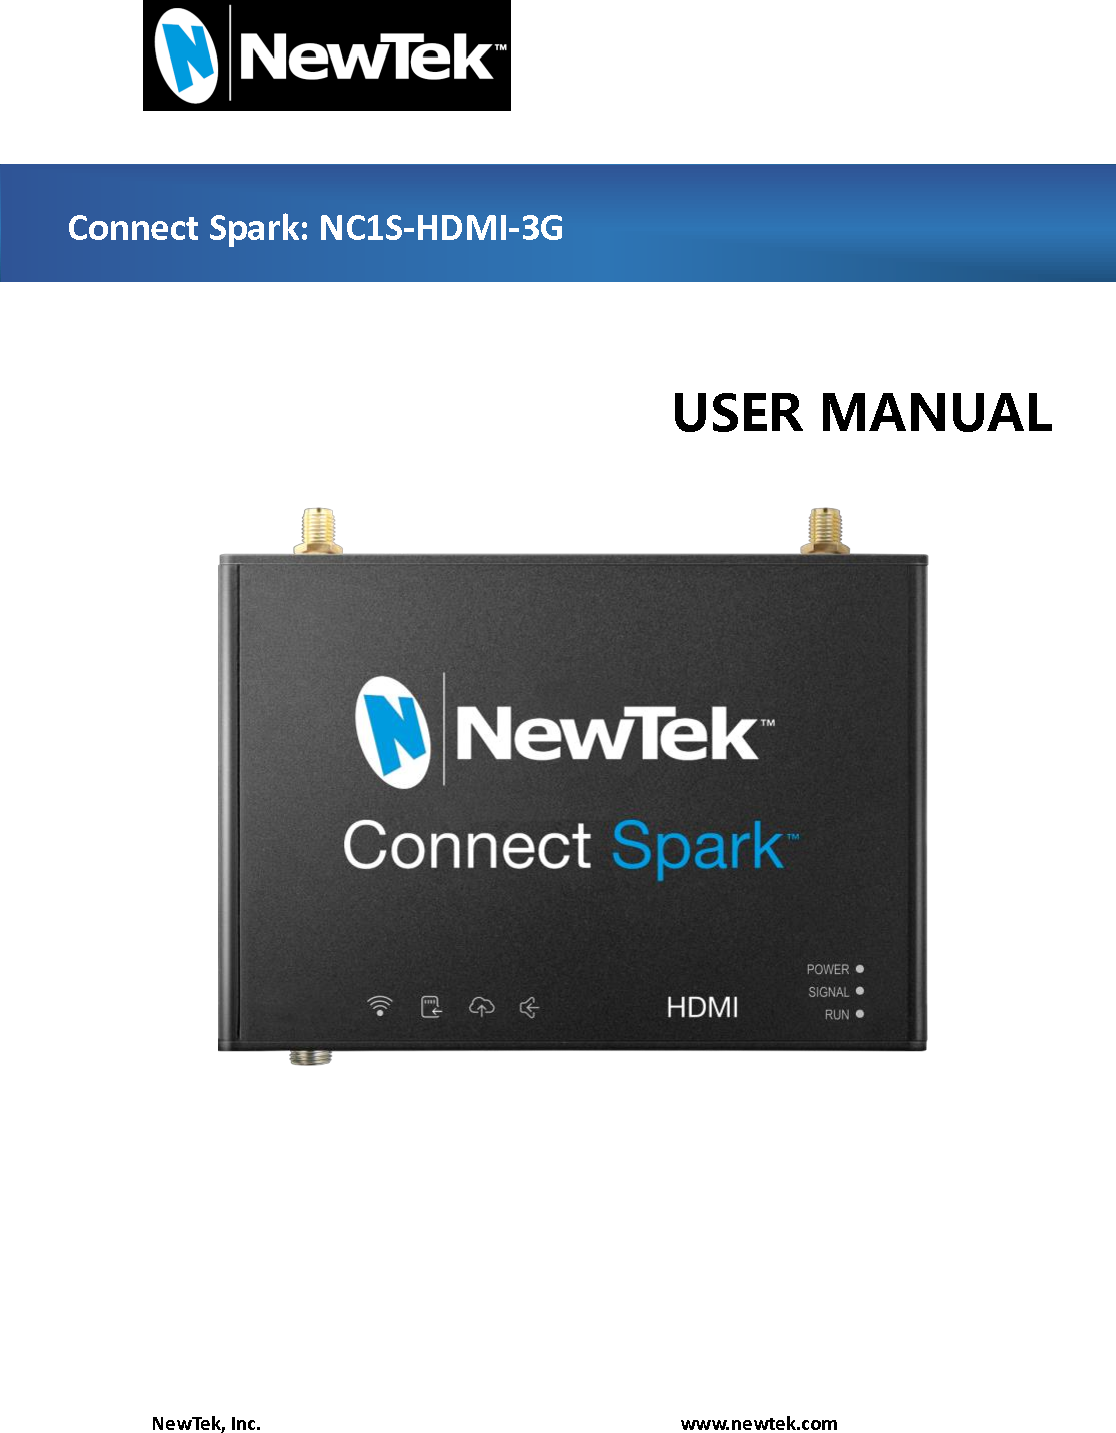     NewTek, Inc.                                                                                www.newtek.com               Connect Spark: NC1S-HDMI-3G  USER MANUAL 